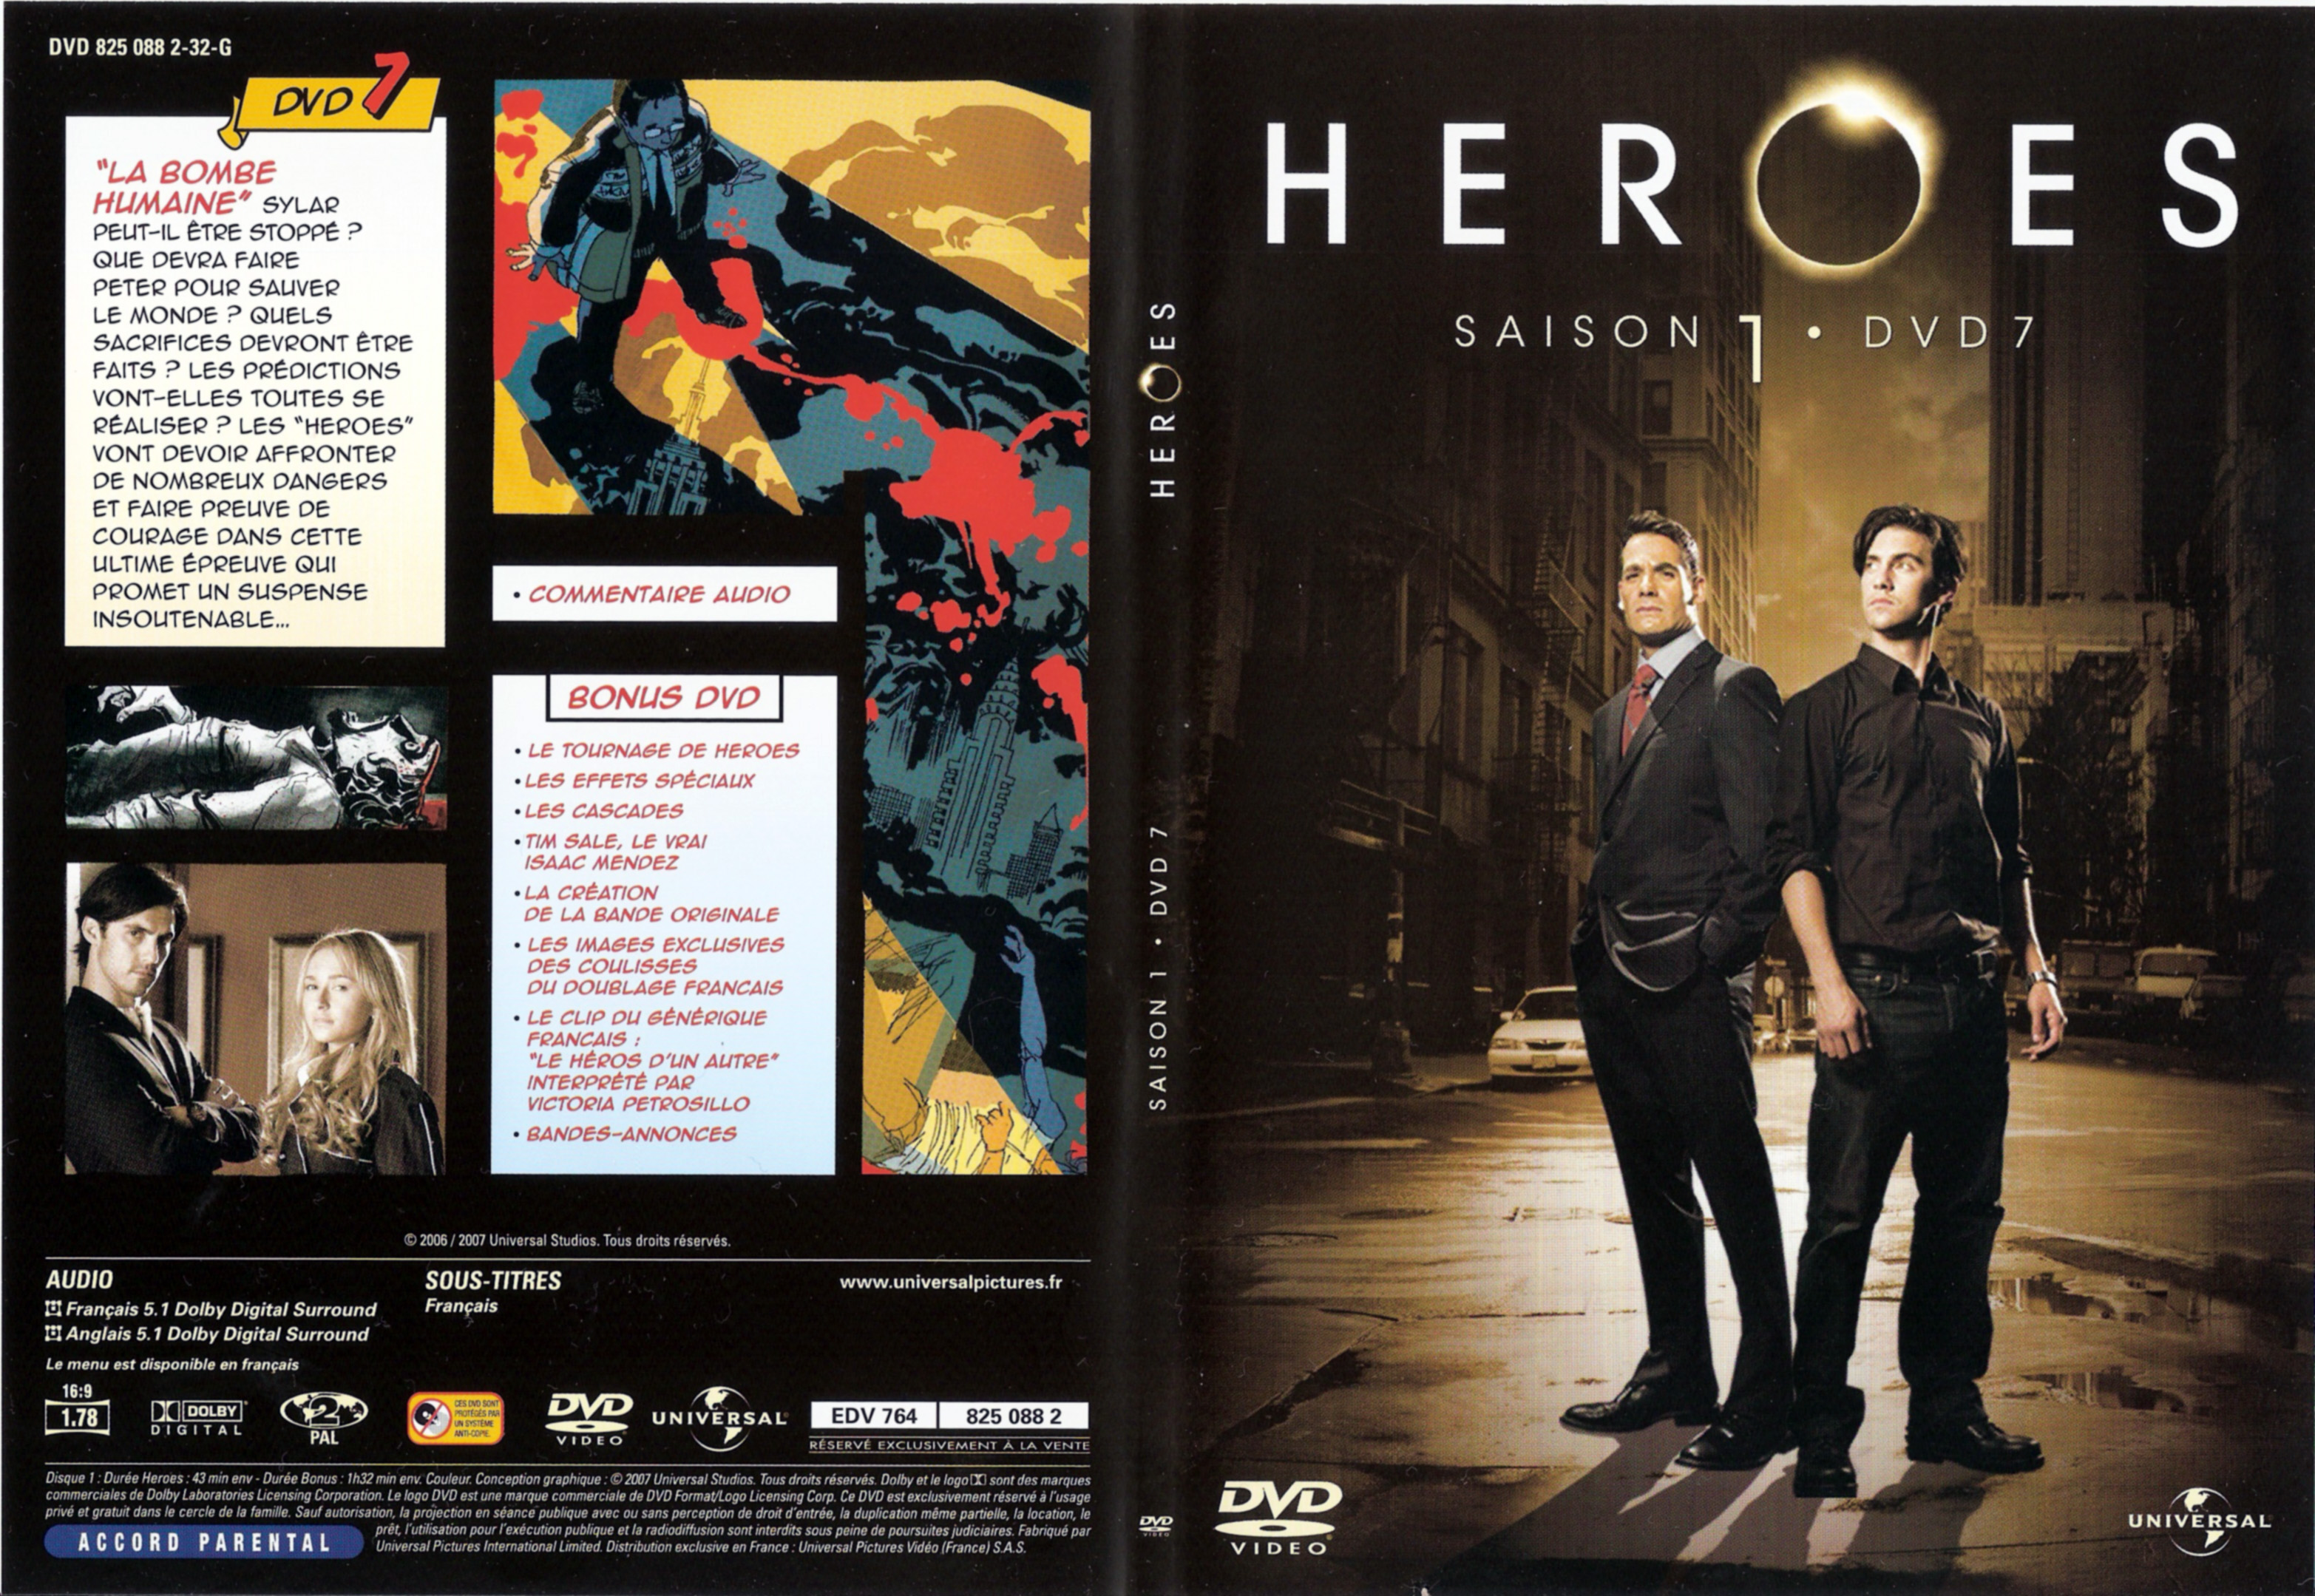 Jaquette DVD Heroes saison 1 DVD 7